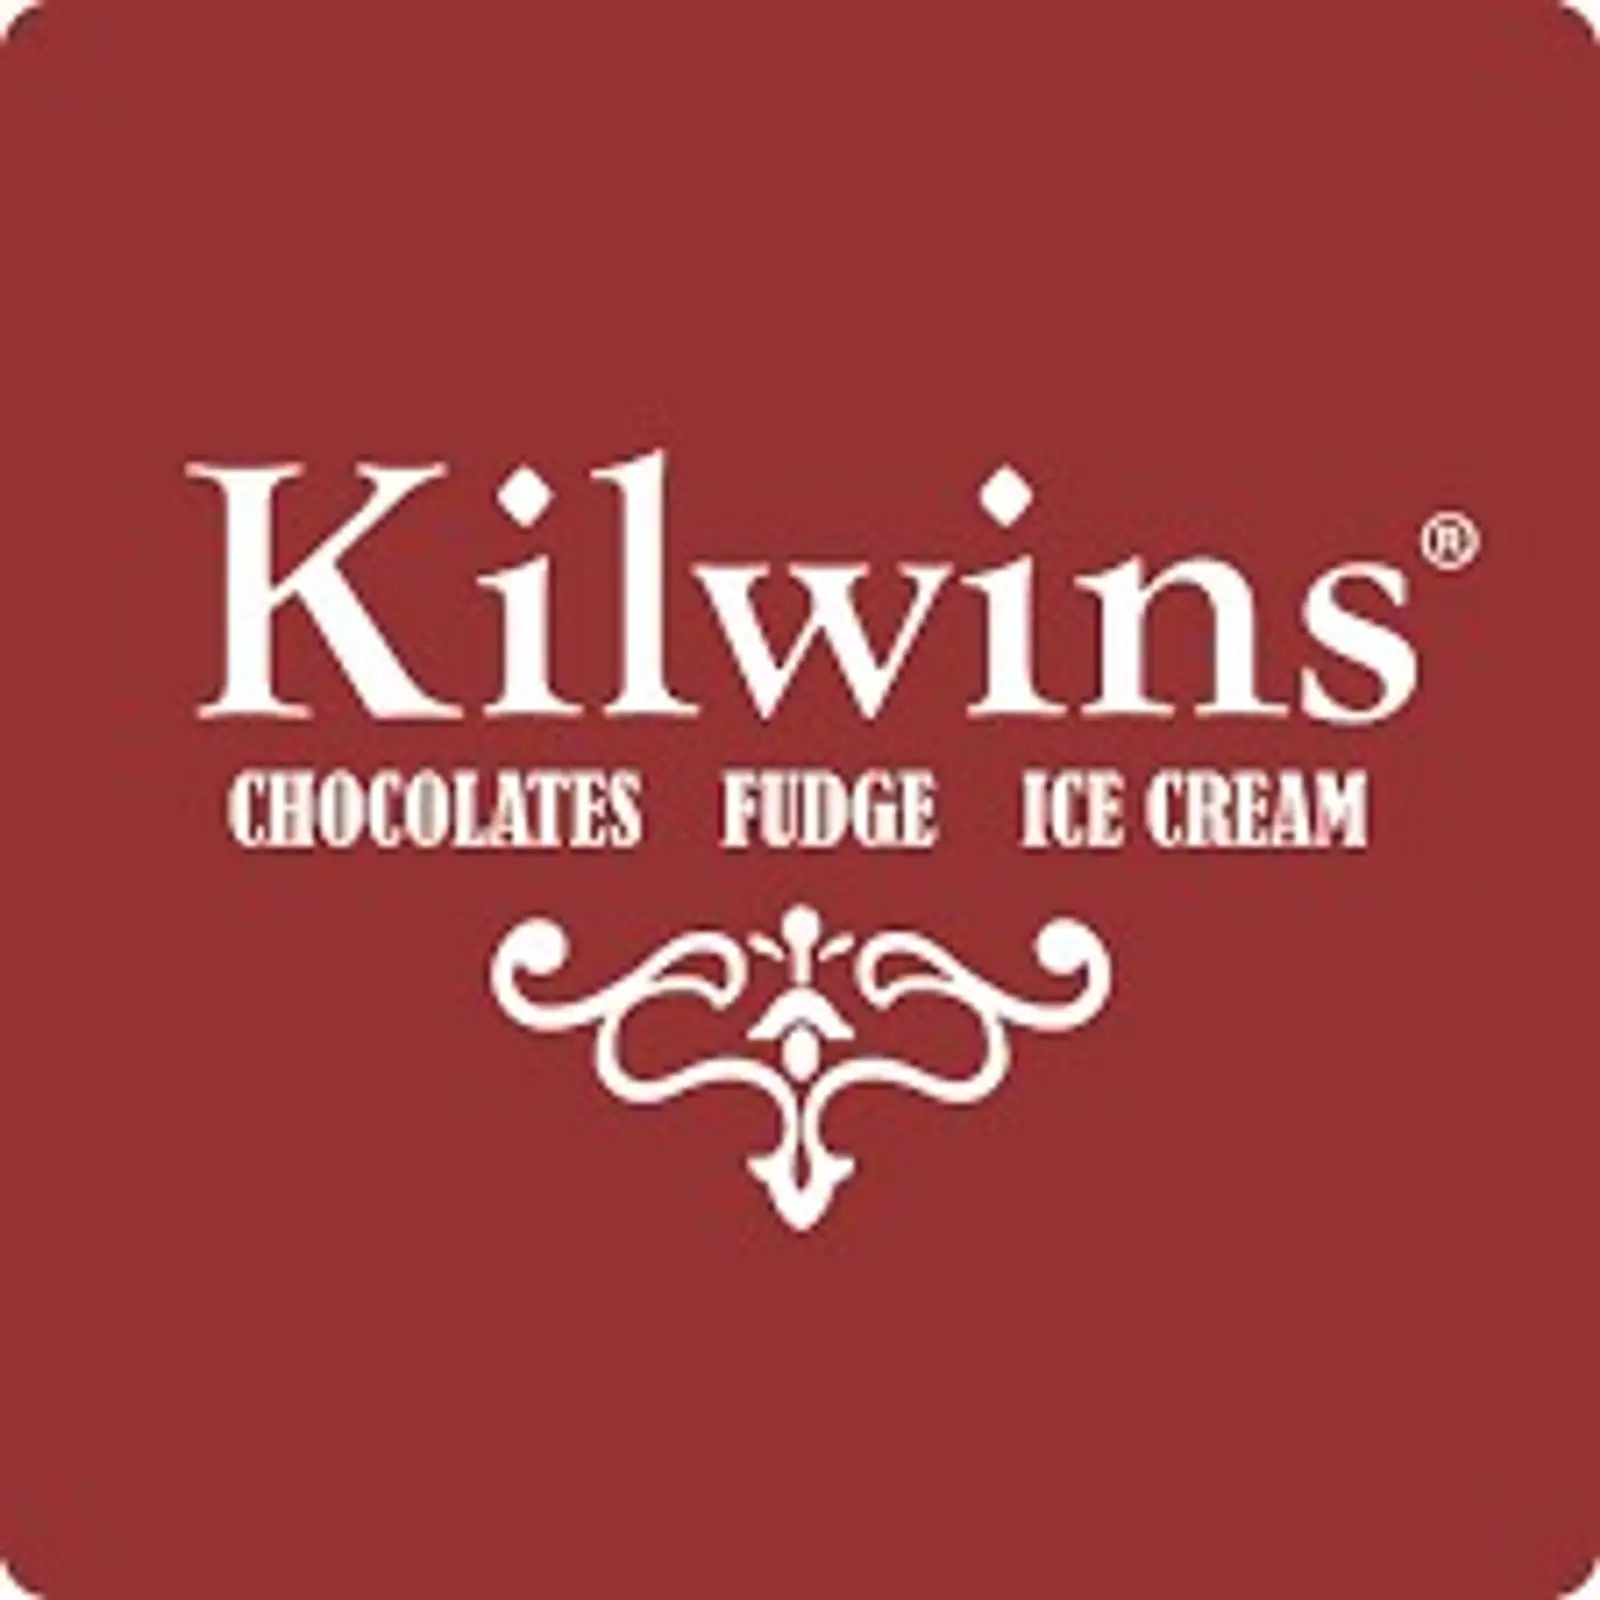 Kilwins logo